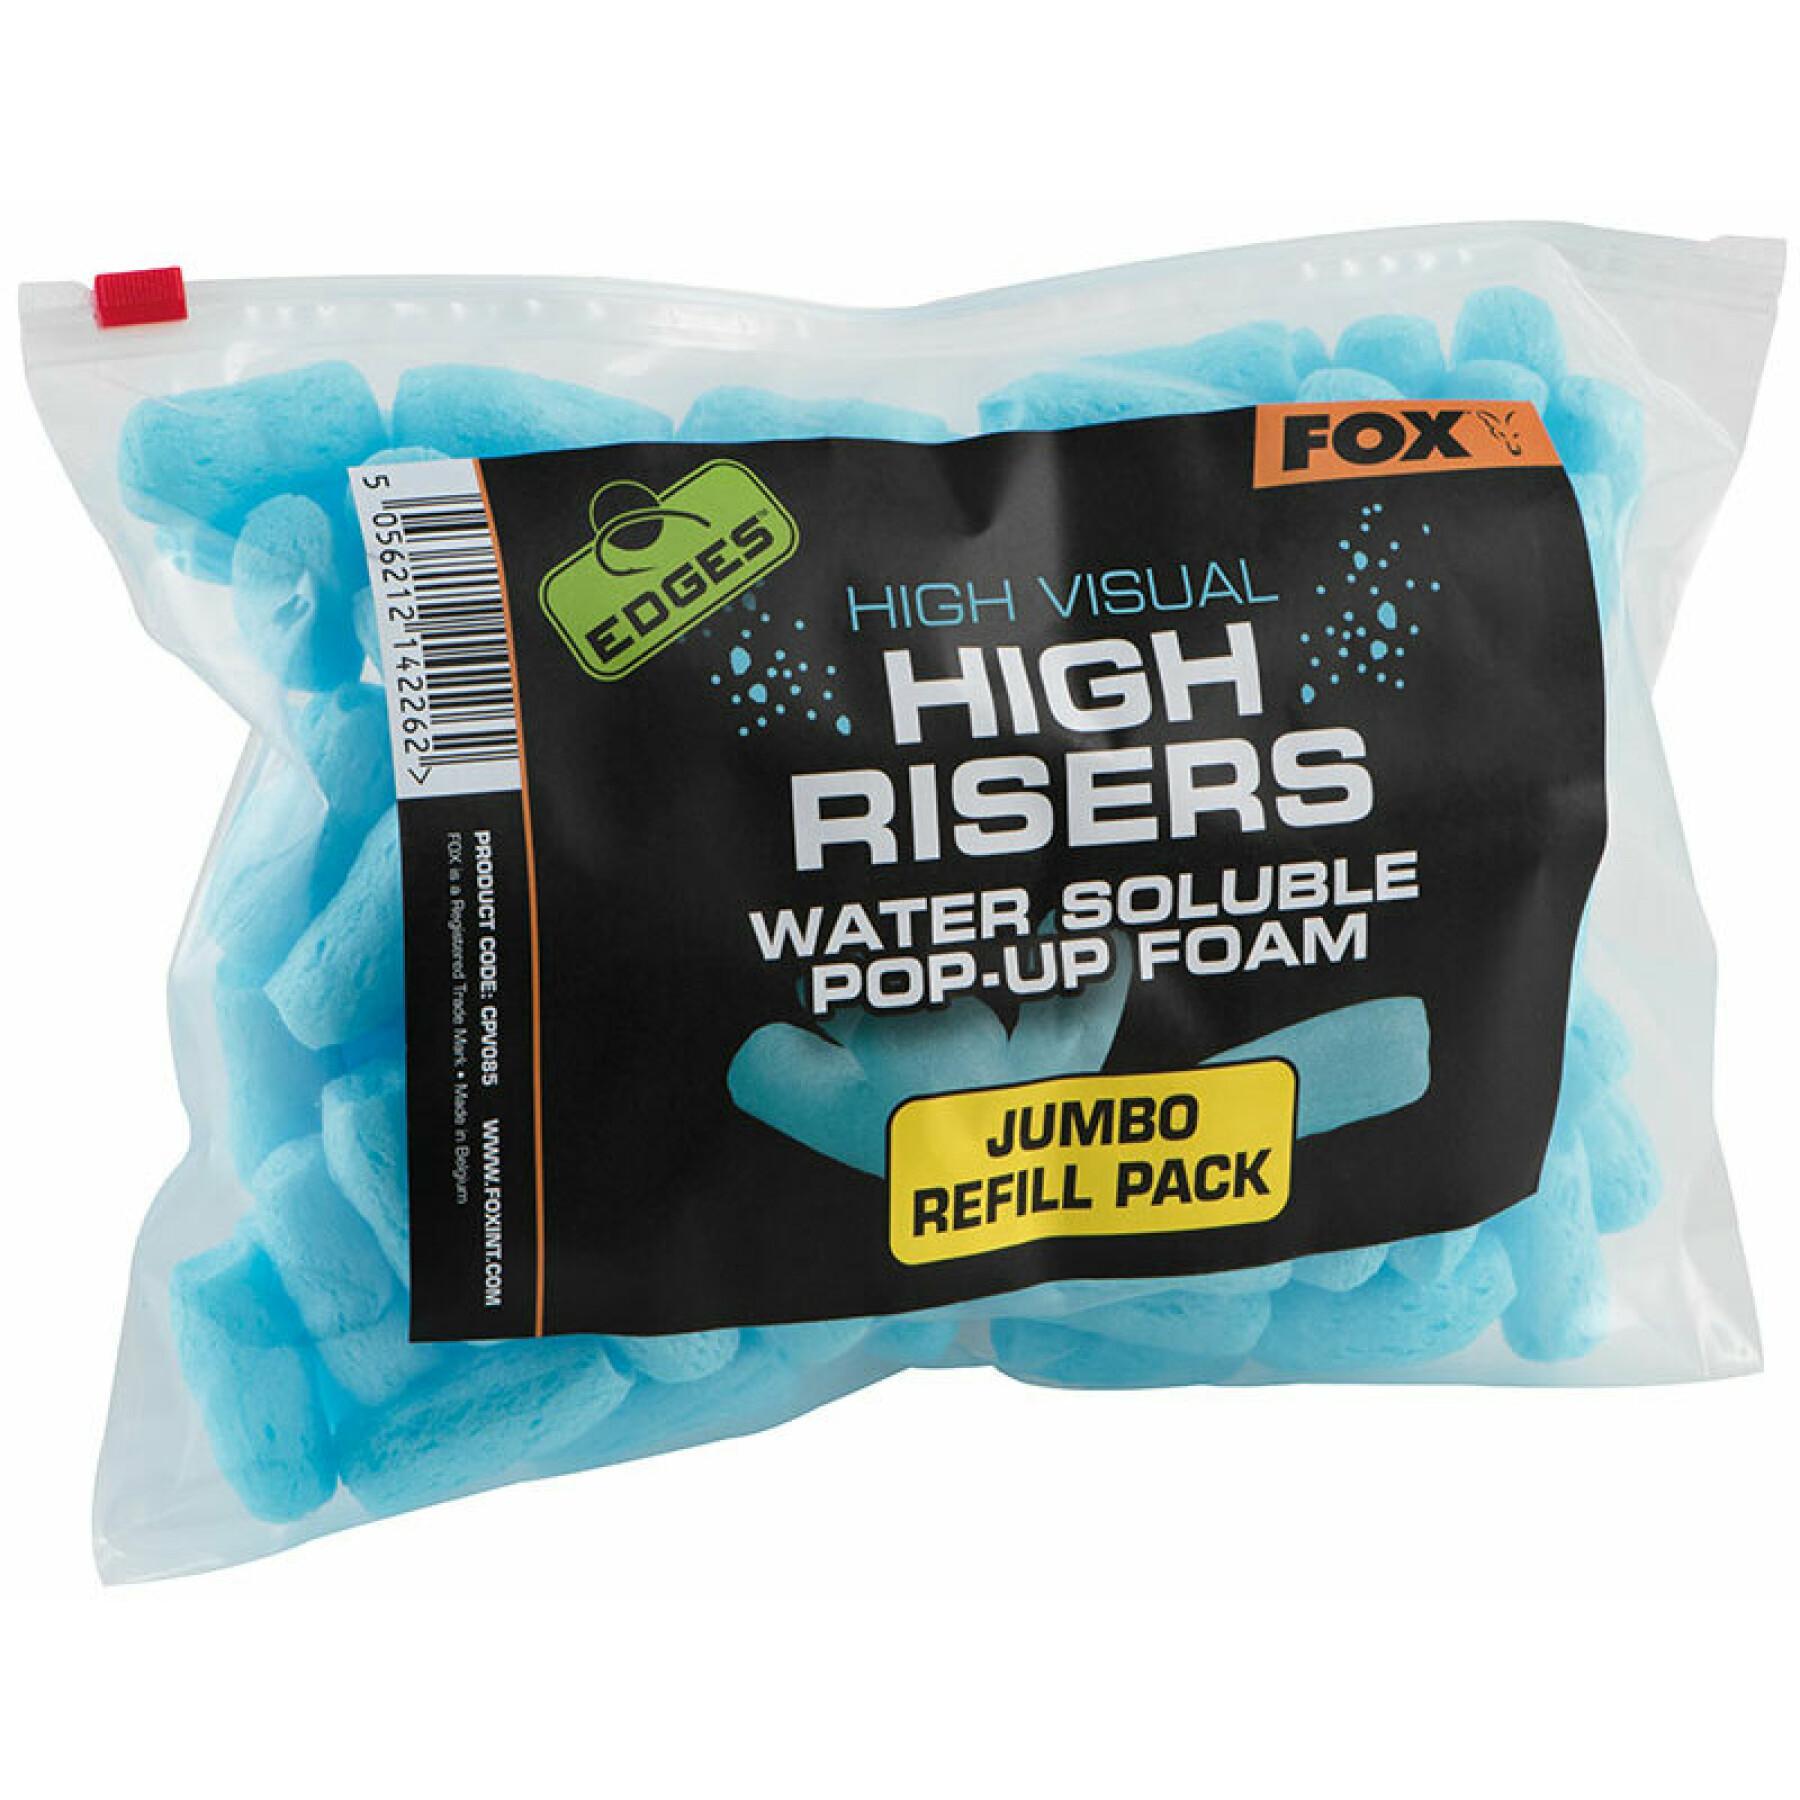 Schaumstoff Fox High Visual High Risers